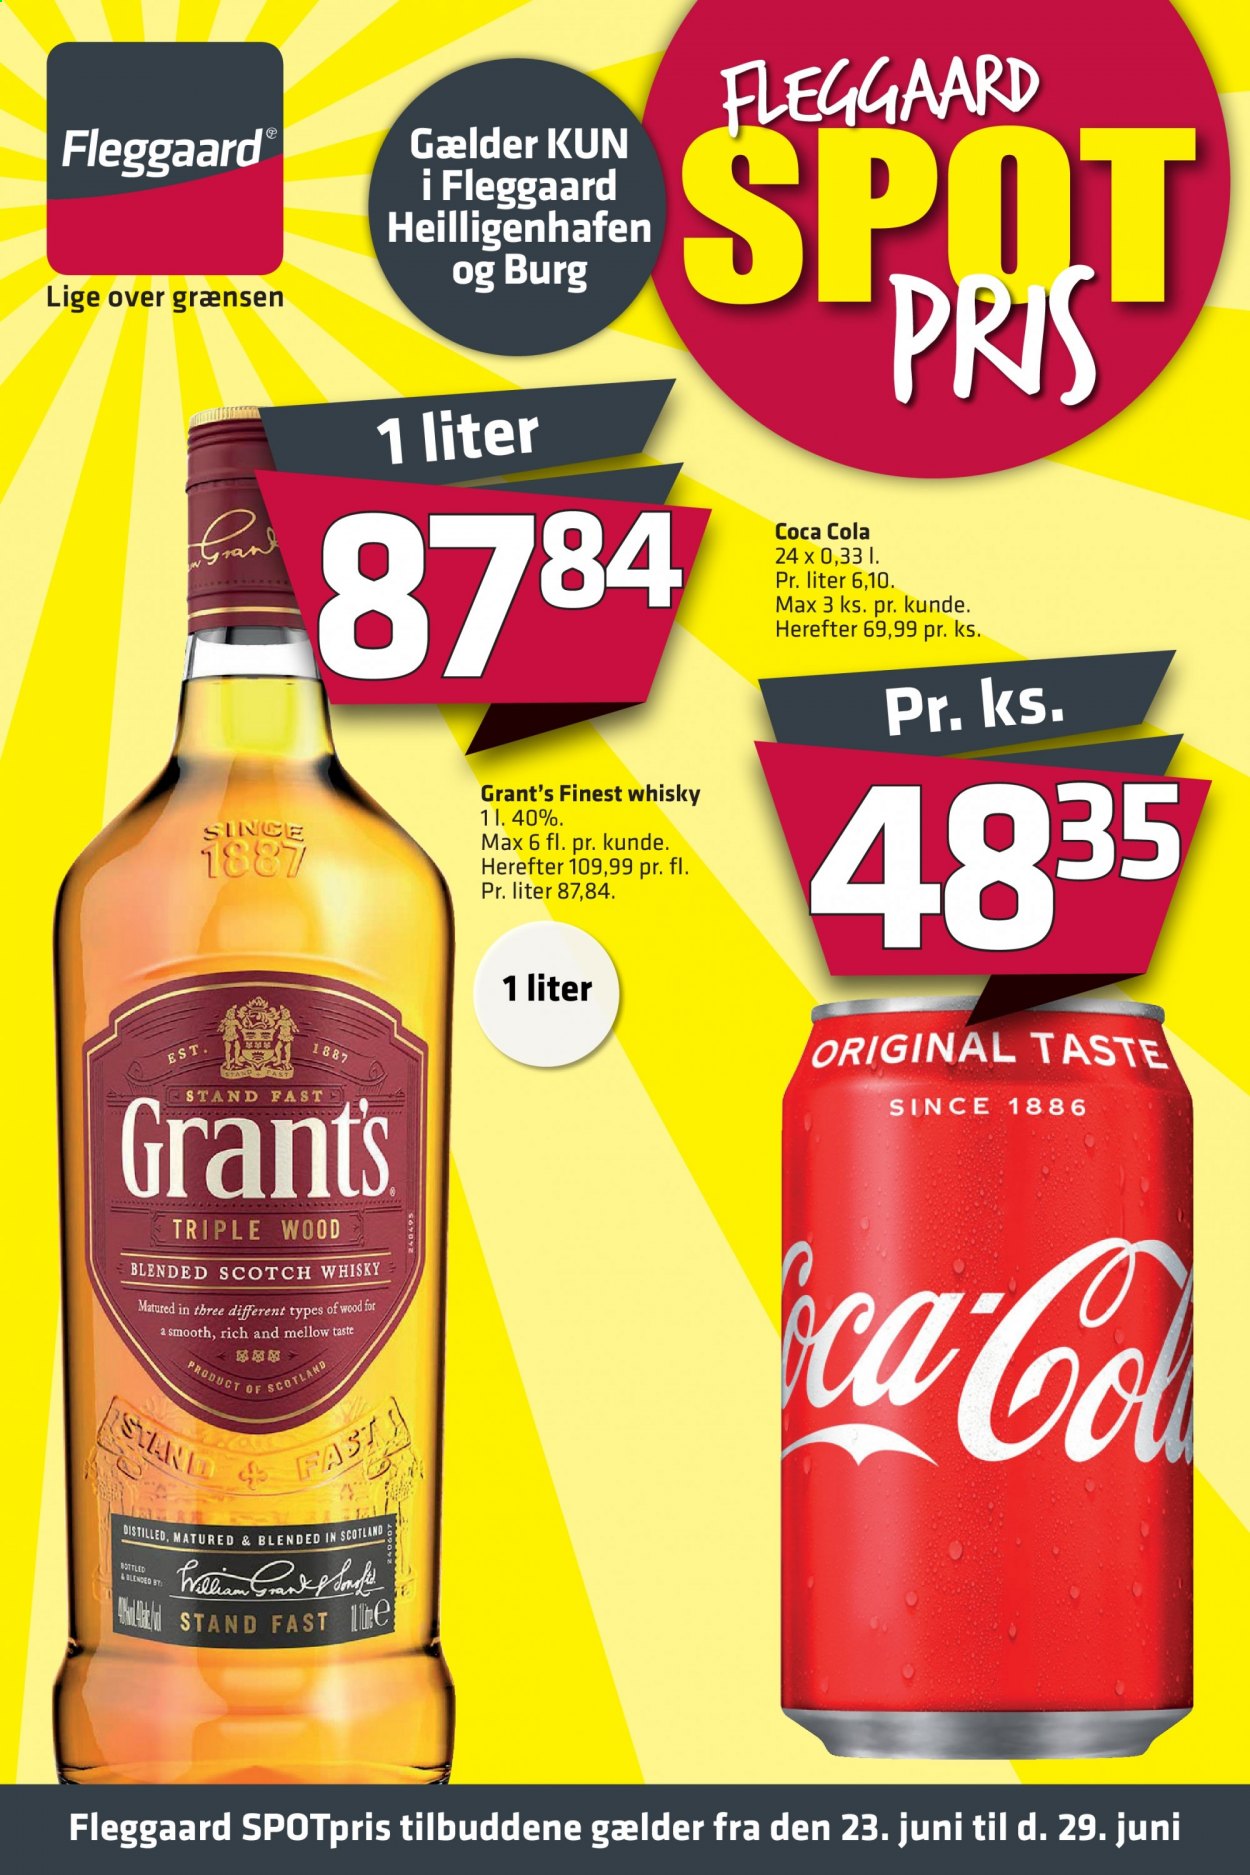 thumbnail - Fleggaard tilbud  - 23.6.2021 - 29.6.2021 - tilbudsprodukter - Coca-Cola, Grant‘s, scotch whisky, whisky. Side 1.